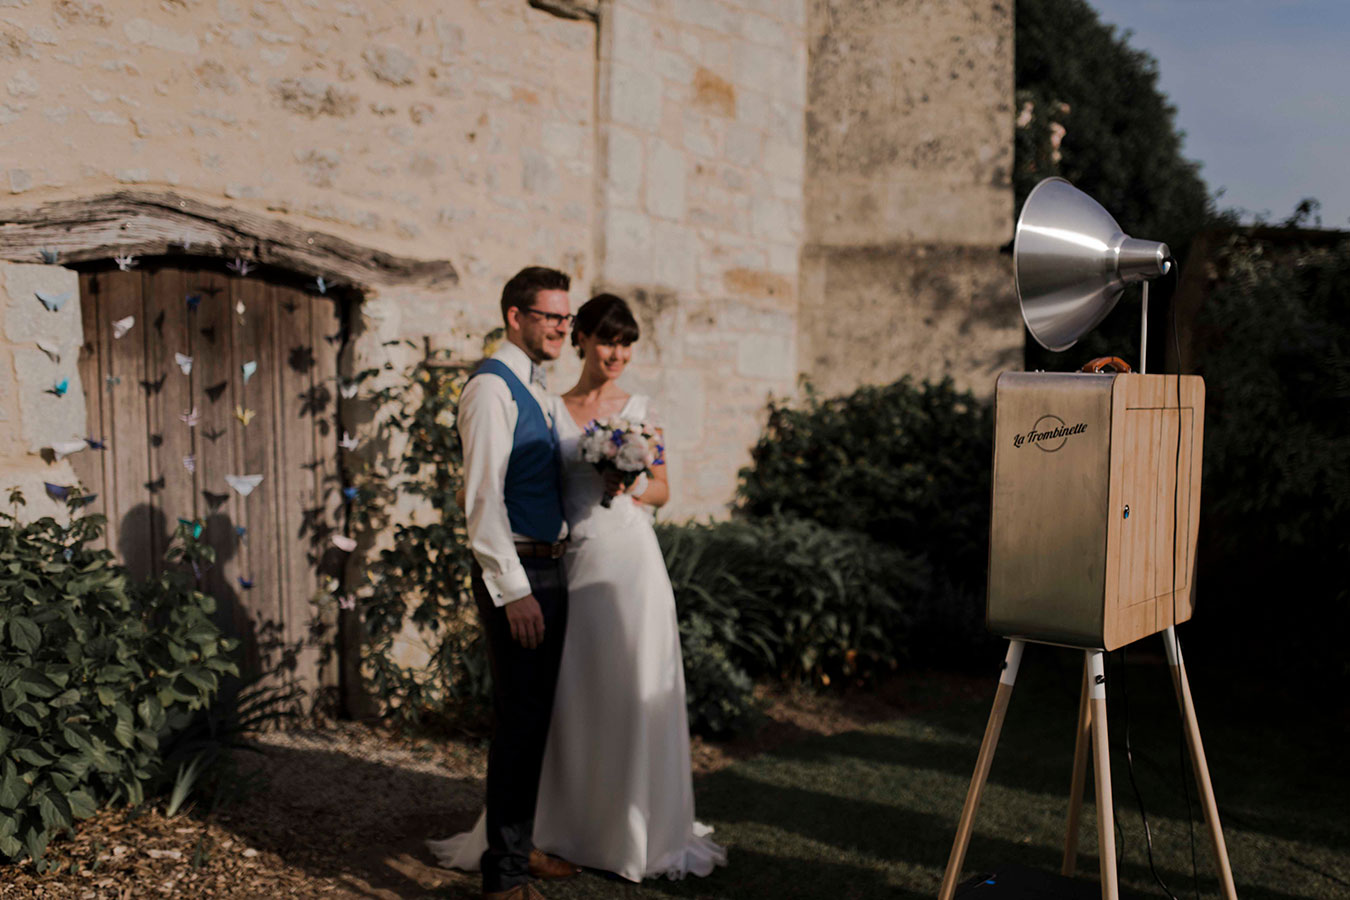 photobooth mariage en Normandie. Location à Caen